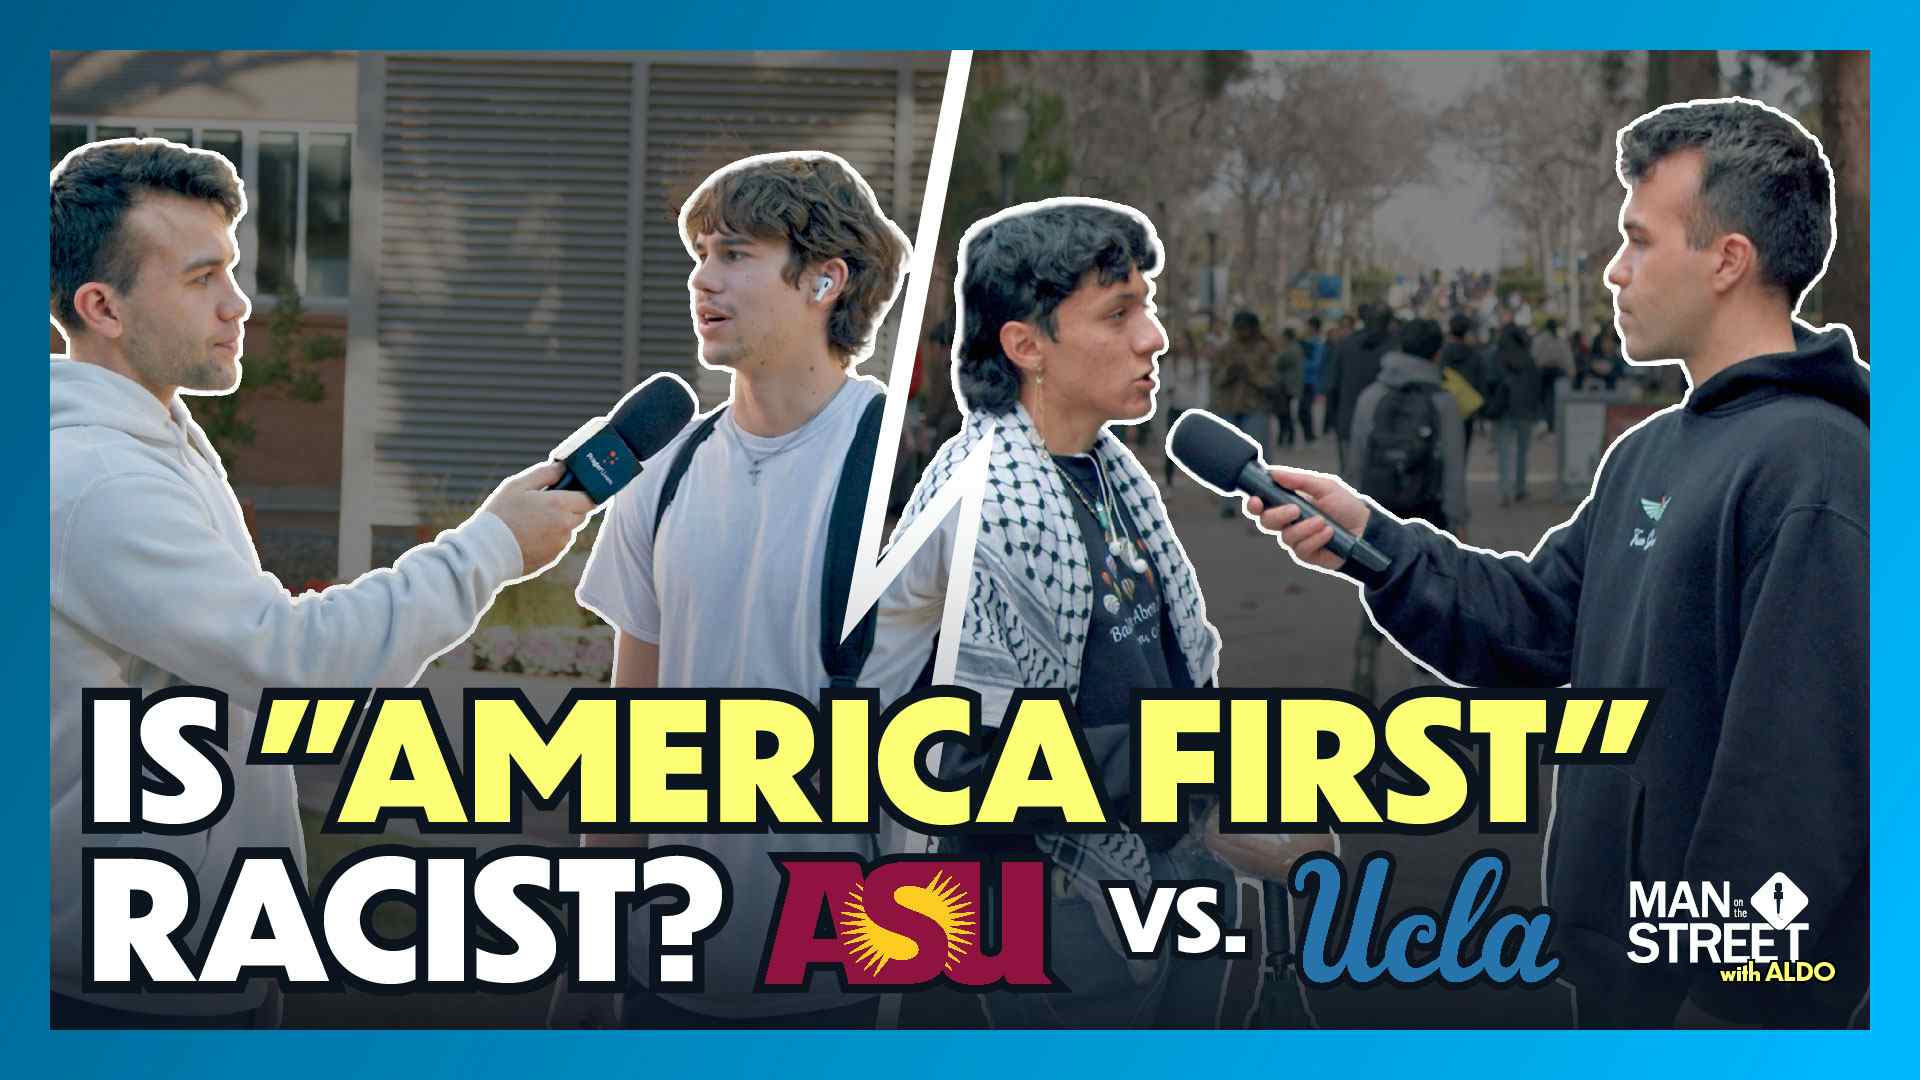 Is "America First" Racist?: UCLA vs. ASU